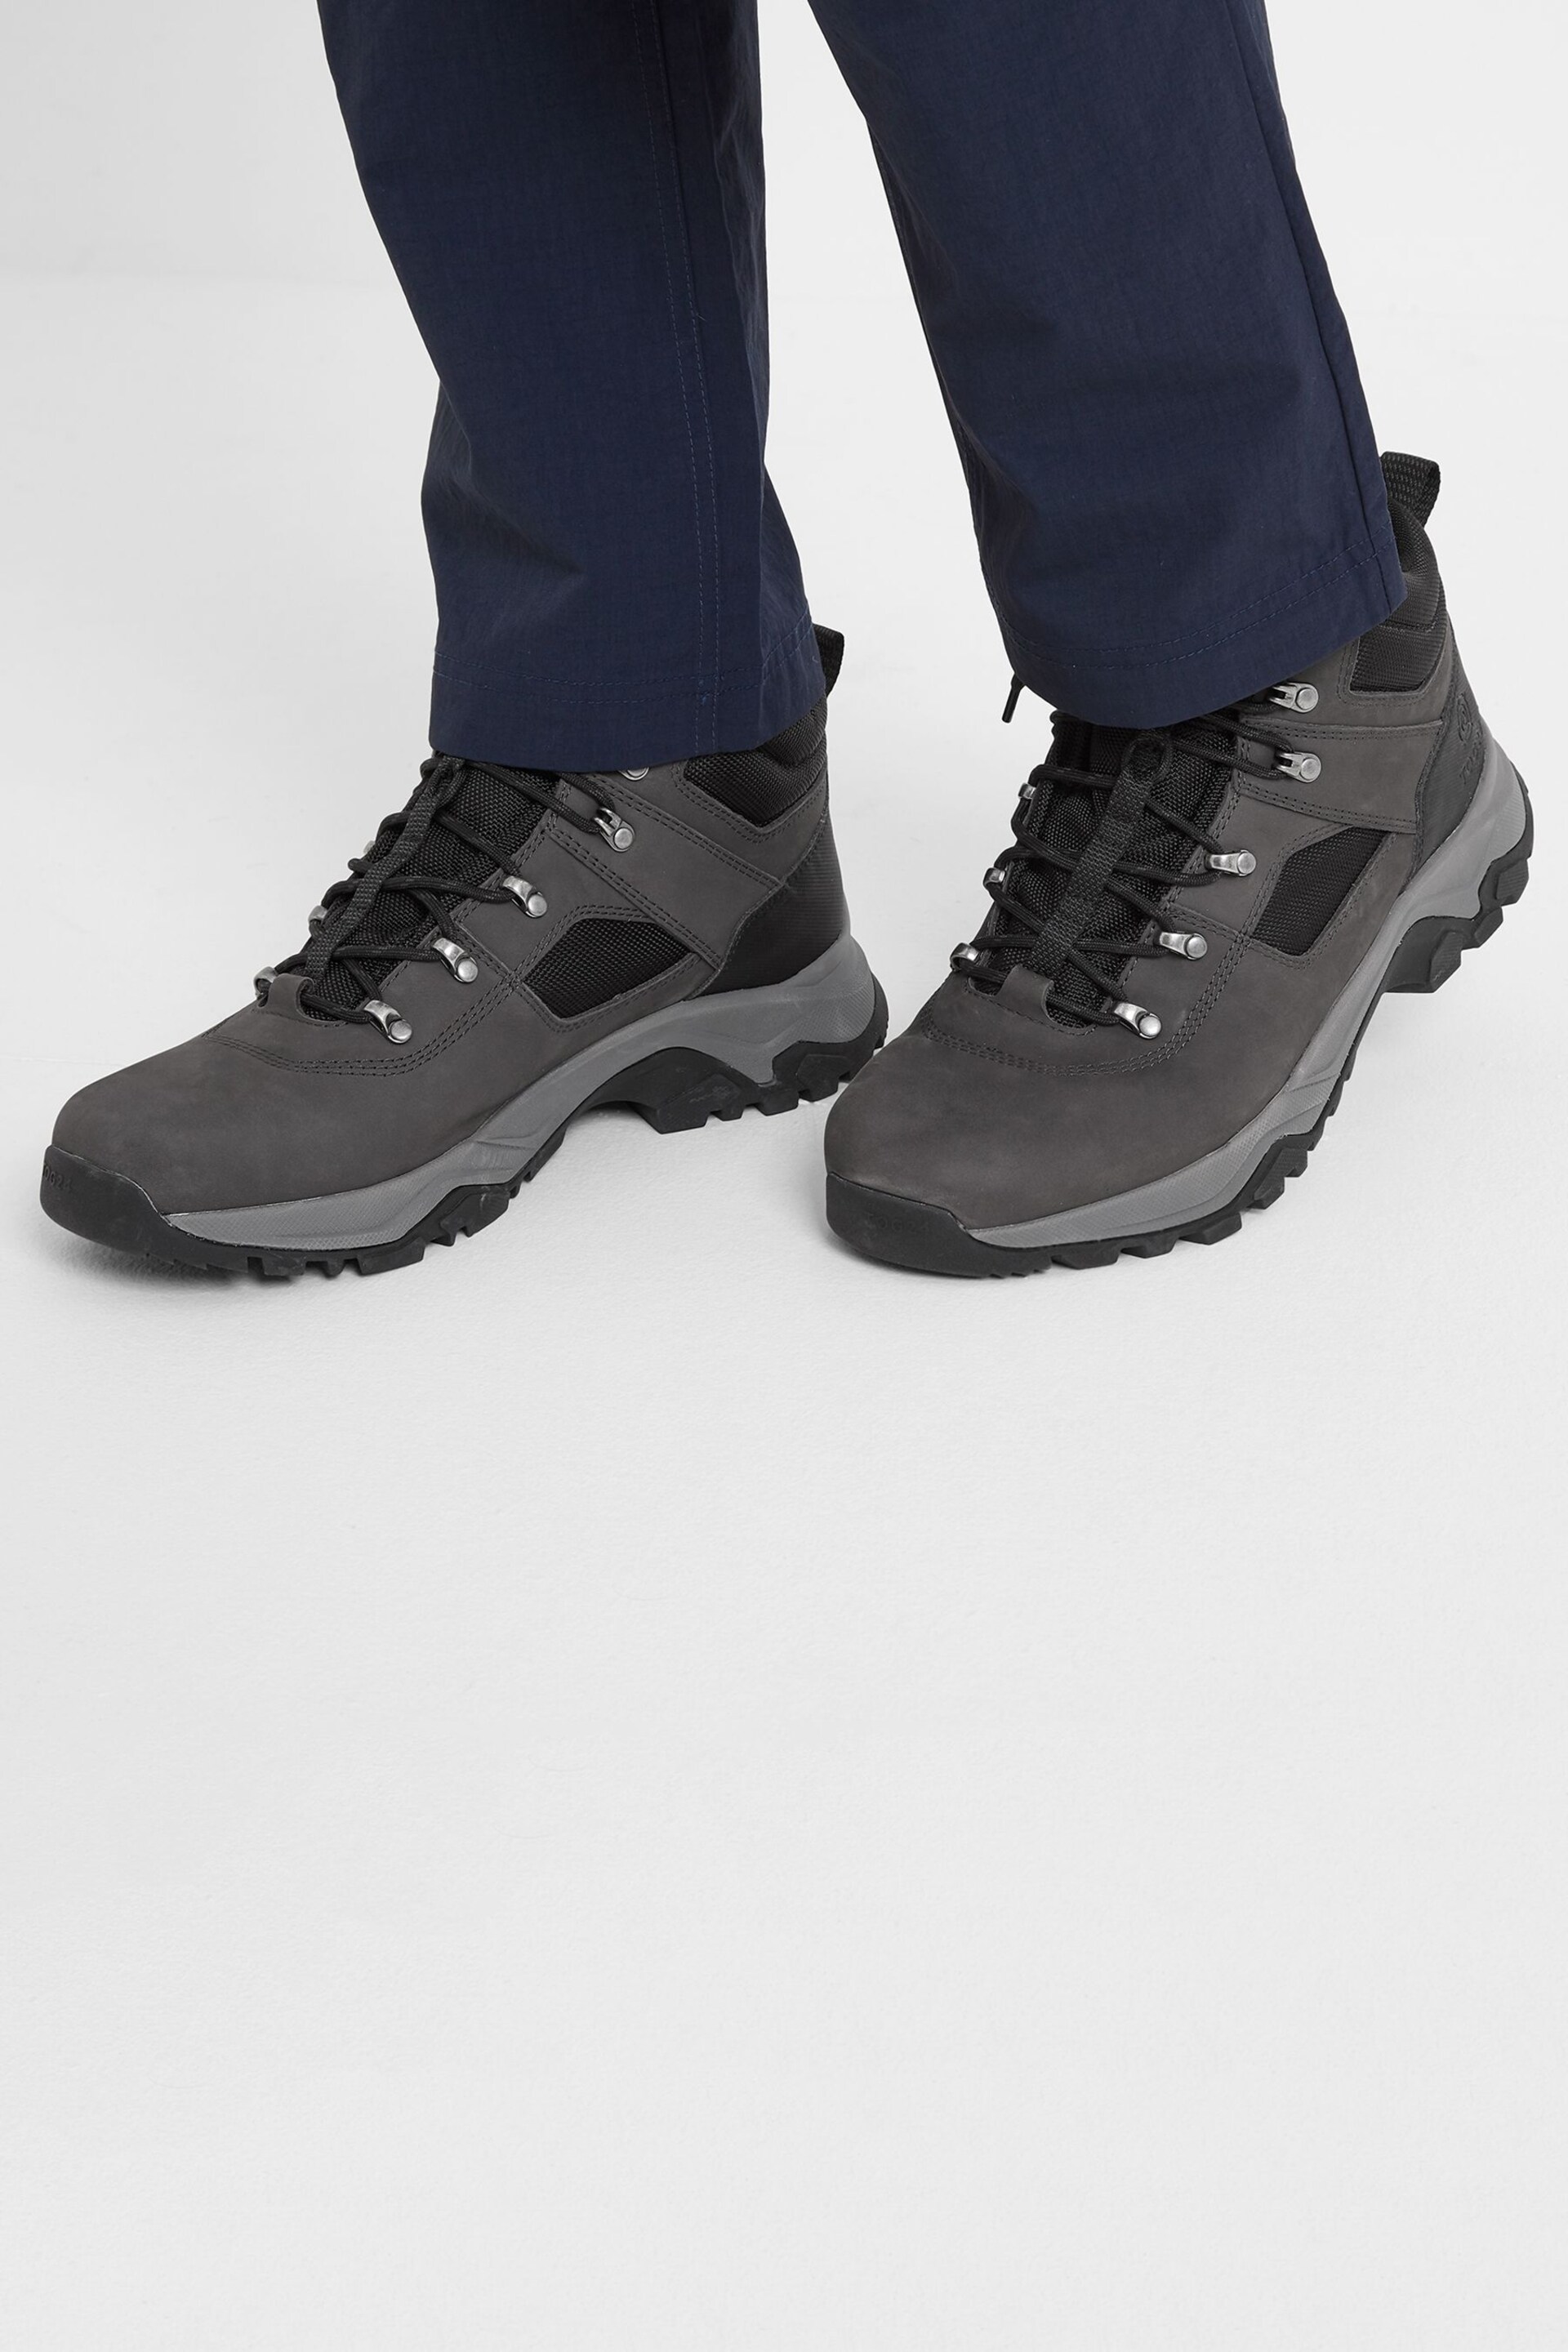 Tog 24 Grey Tundra Walking Boots - Image 1 of 7